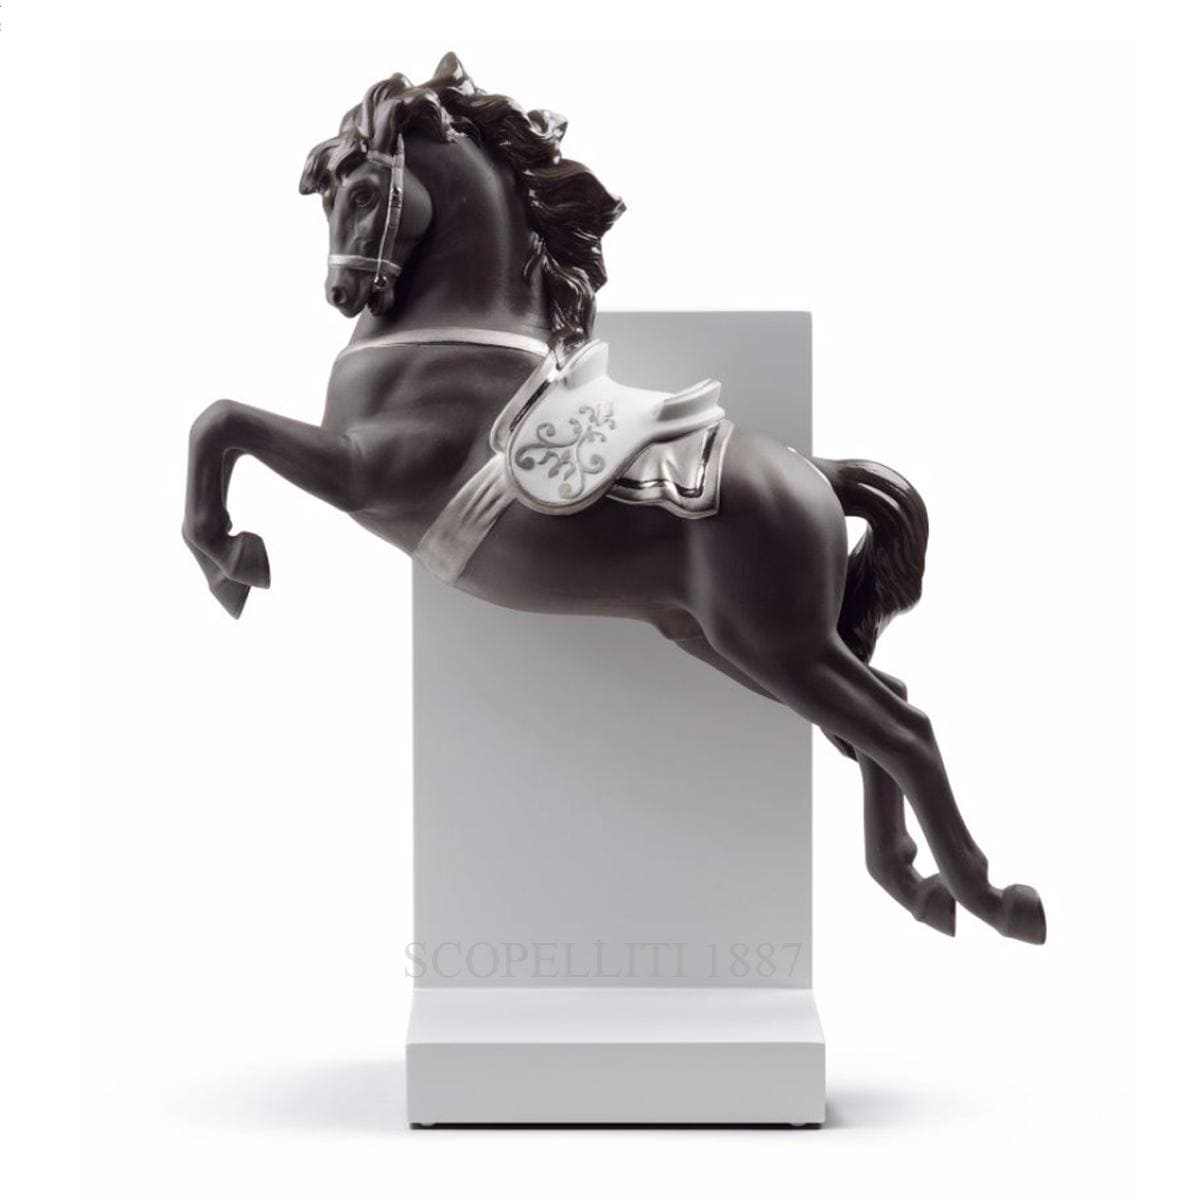 lladro horse on pirouette porcelain figurine spanish designer